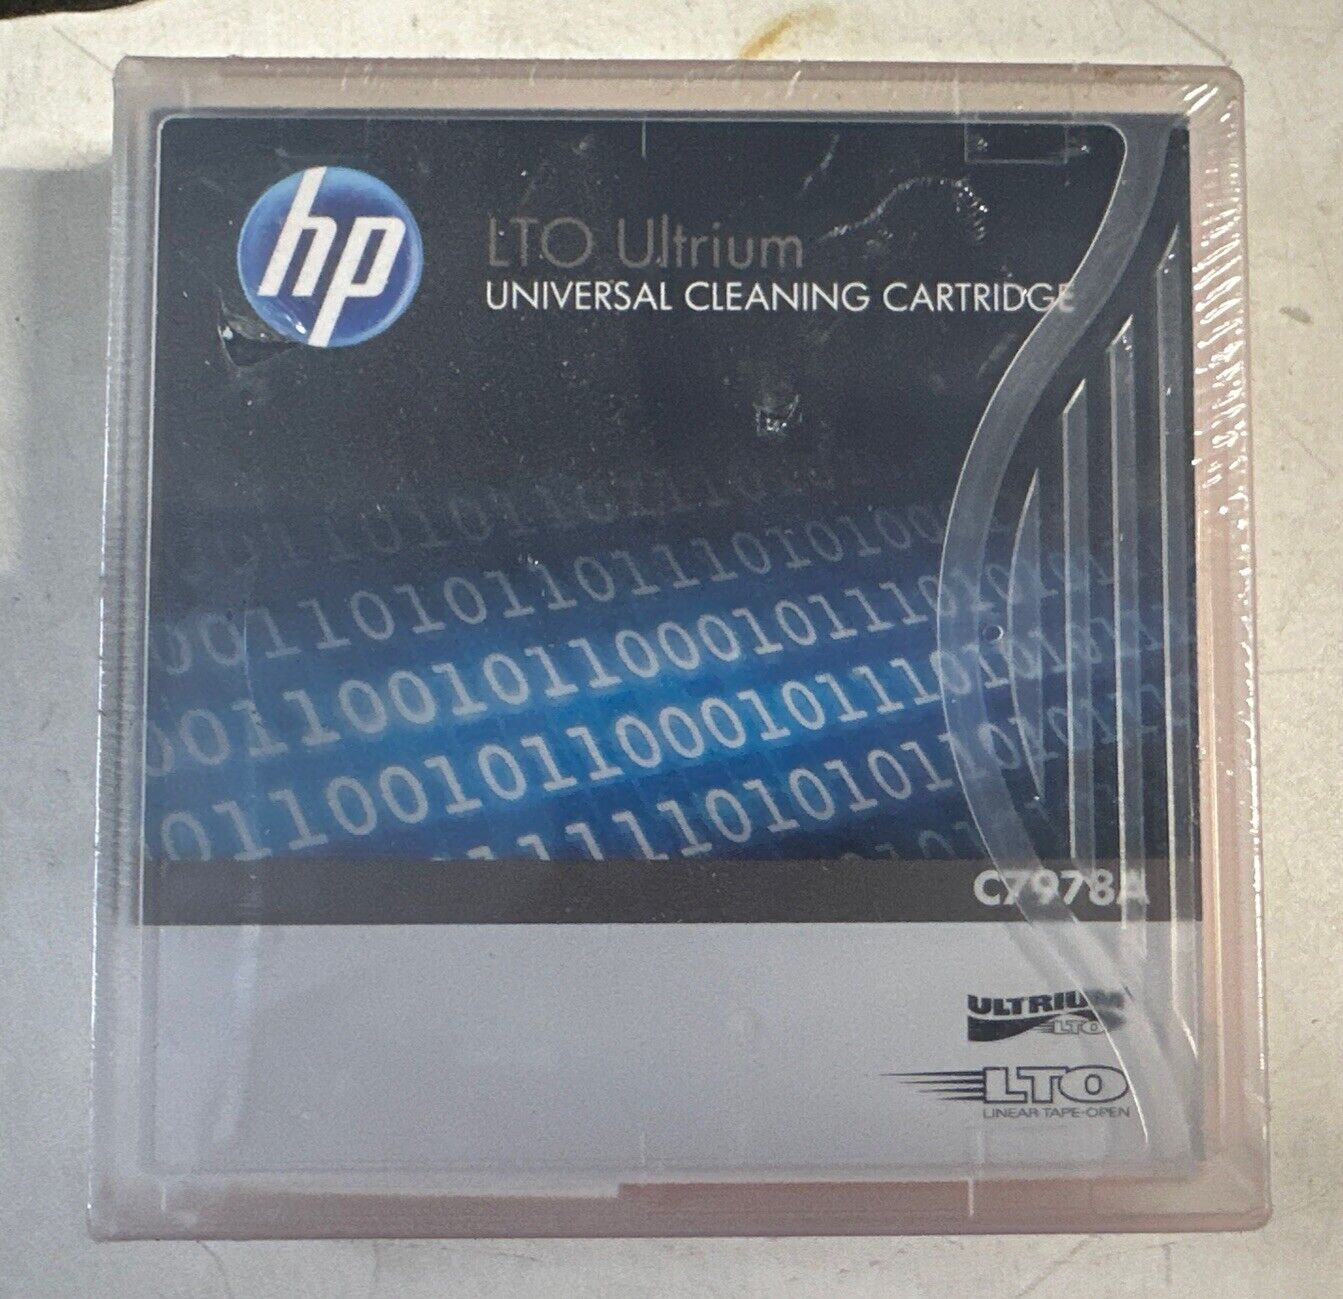 1 HPE Ultrium Universal Cleaning Cartridge HP Hewlett Packard Enterprise C7978A